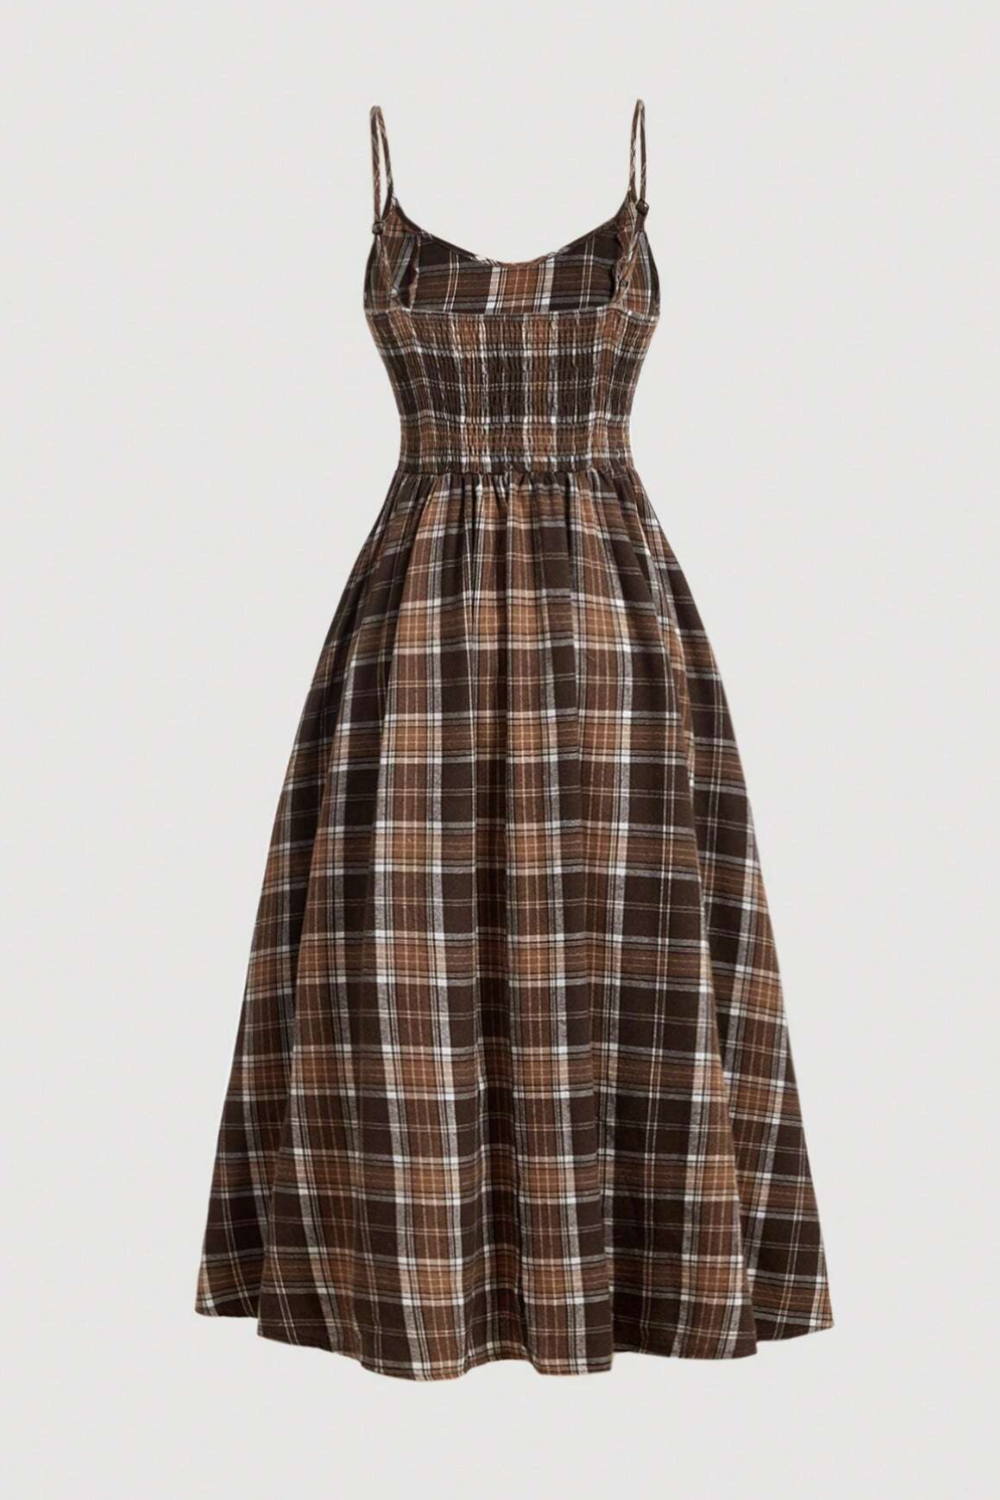 Florence Plaid Overall Vintage Dress